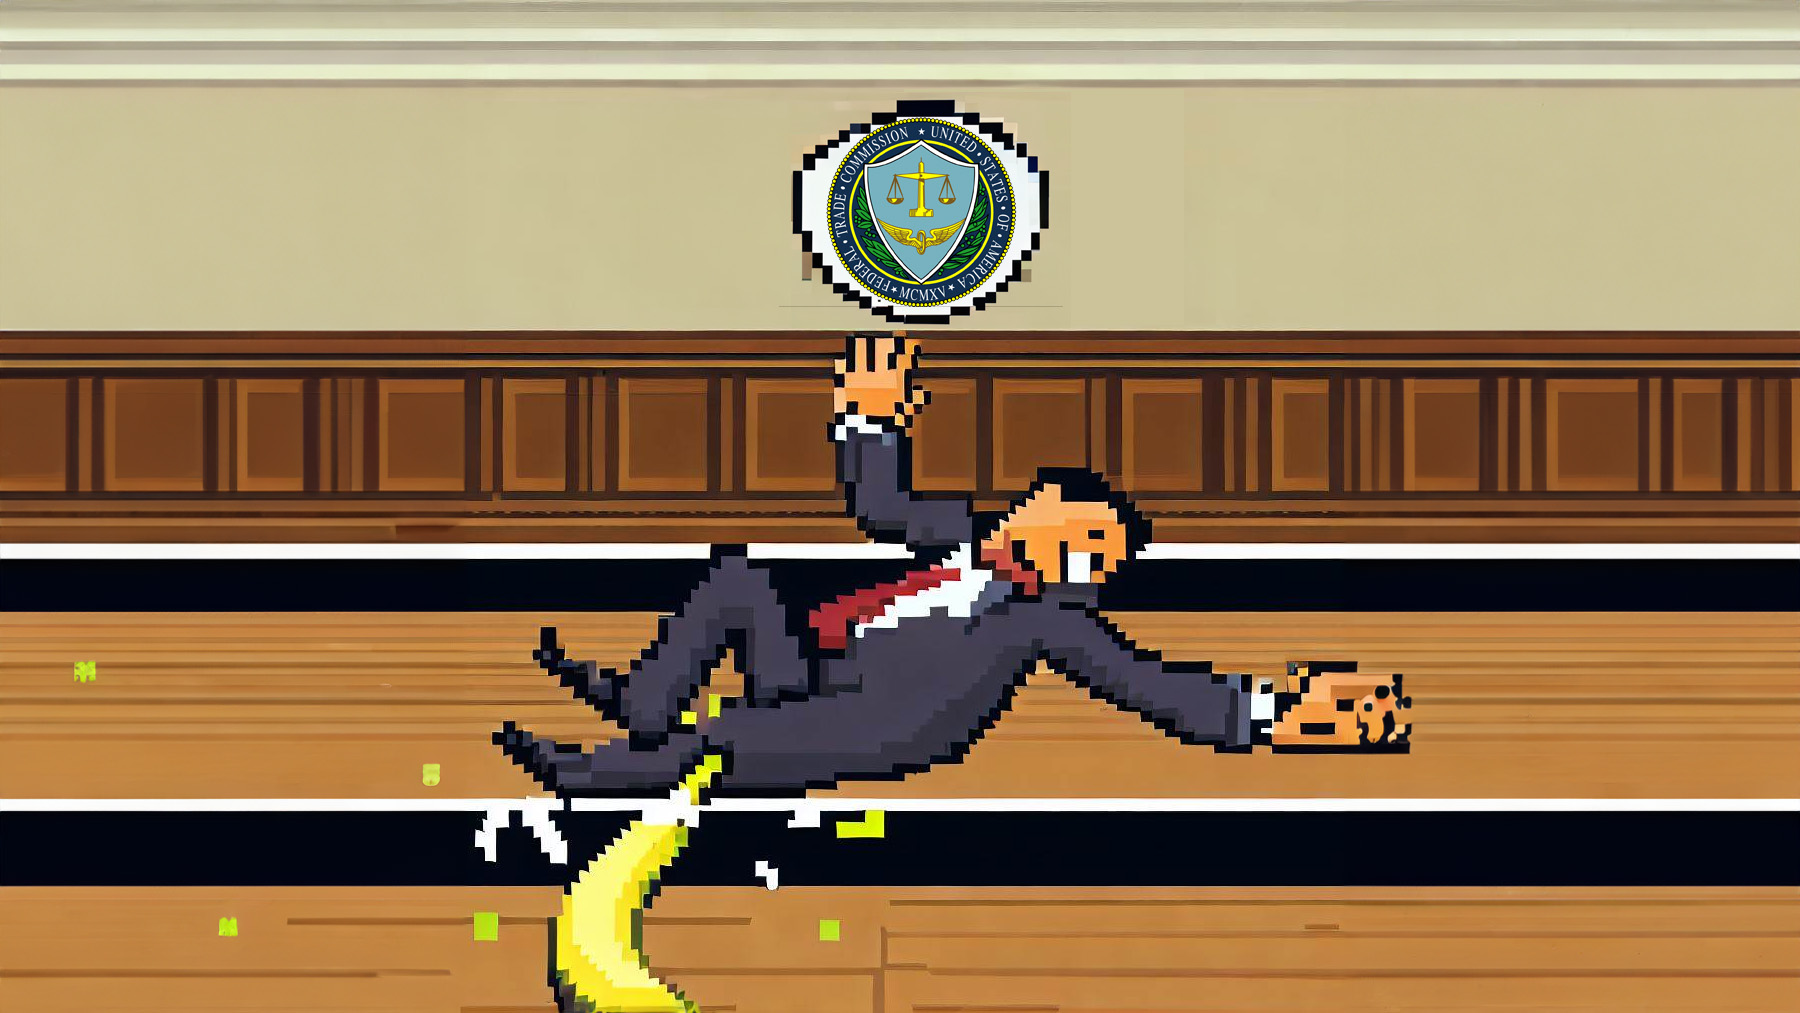 FTC pixel art dude slipping on a banana